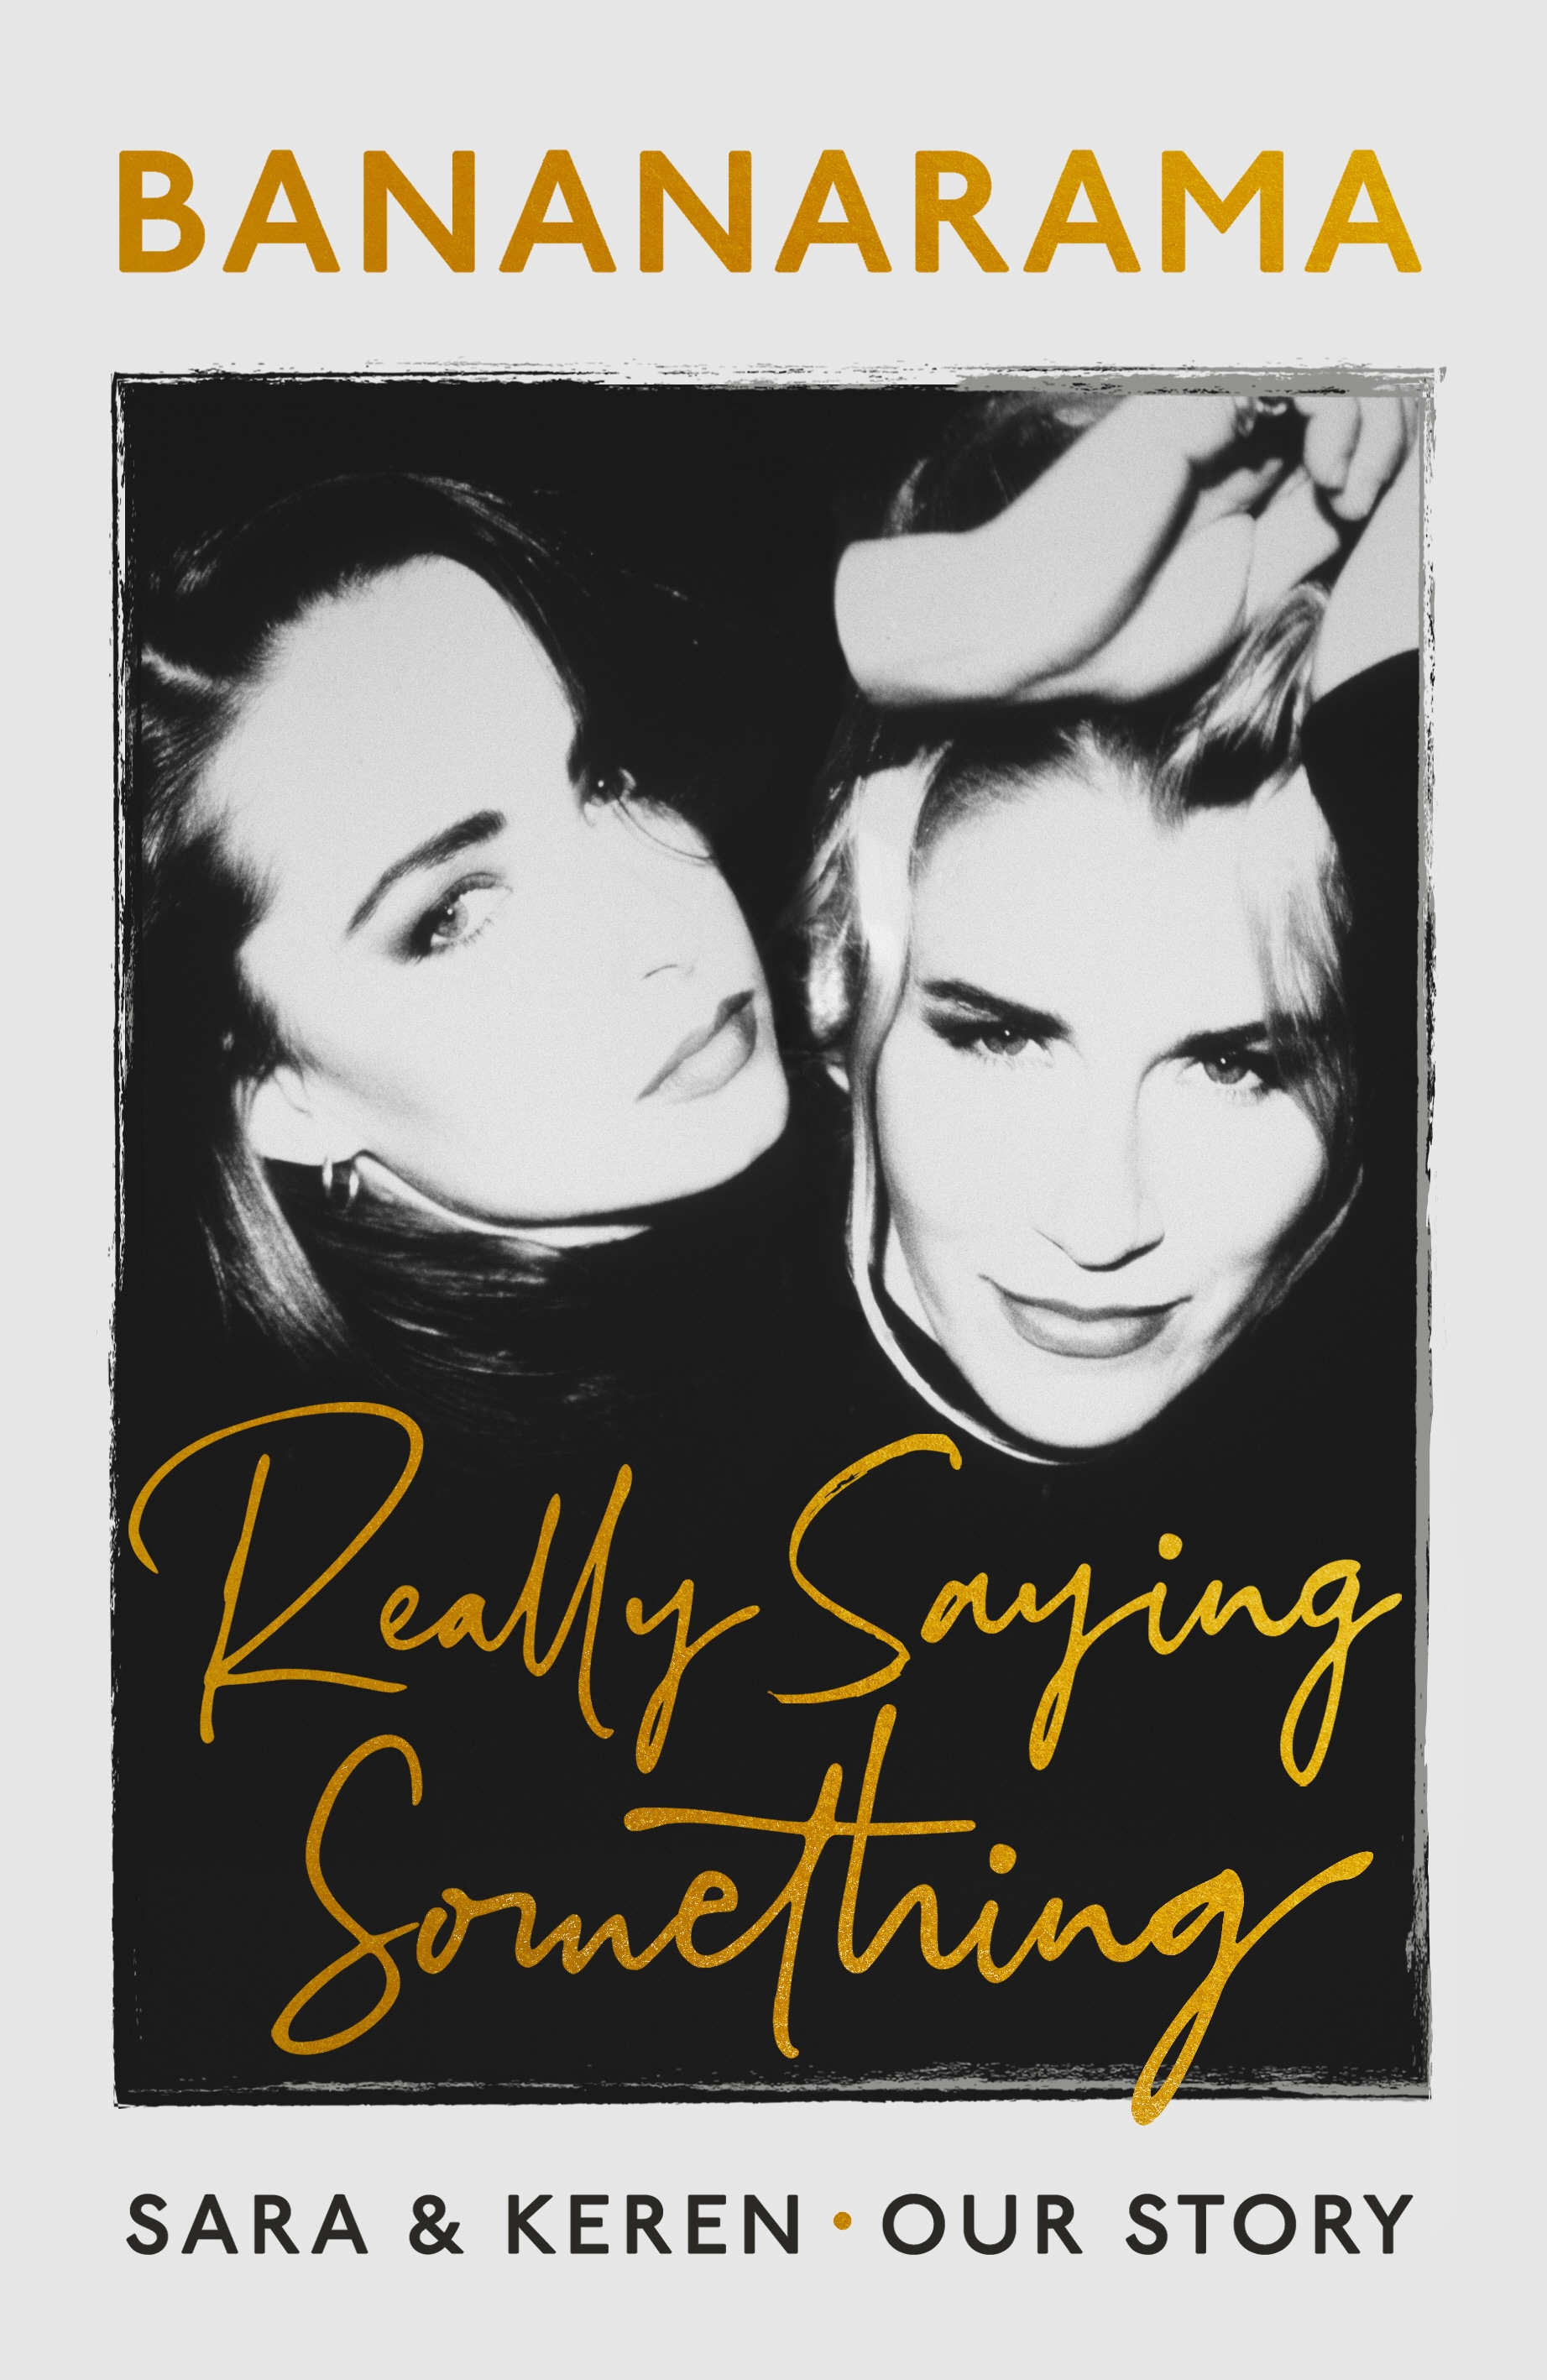 Book “Really Saying Something” by Sara Dallin, Keren Woodward — October 29, 2020